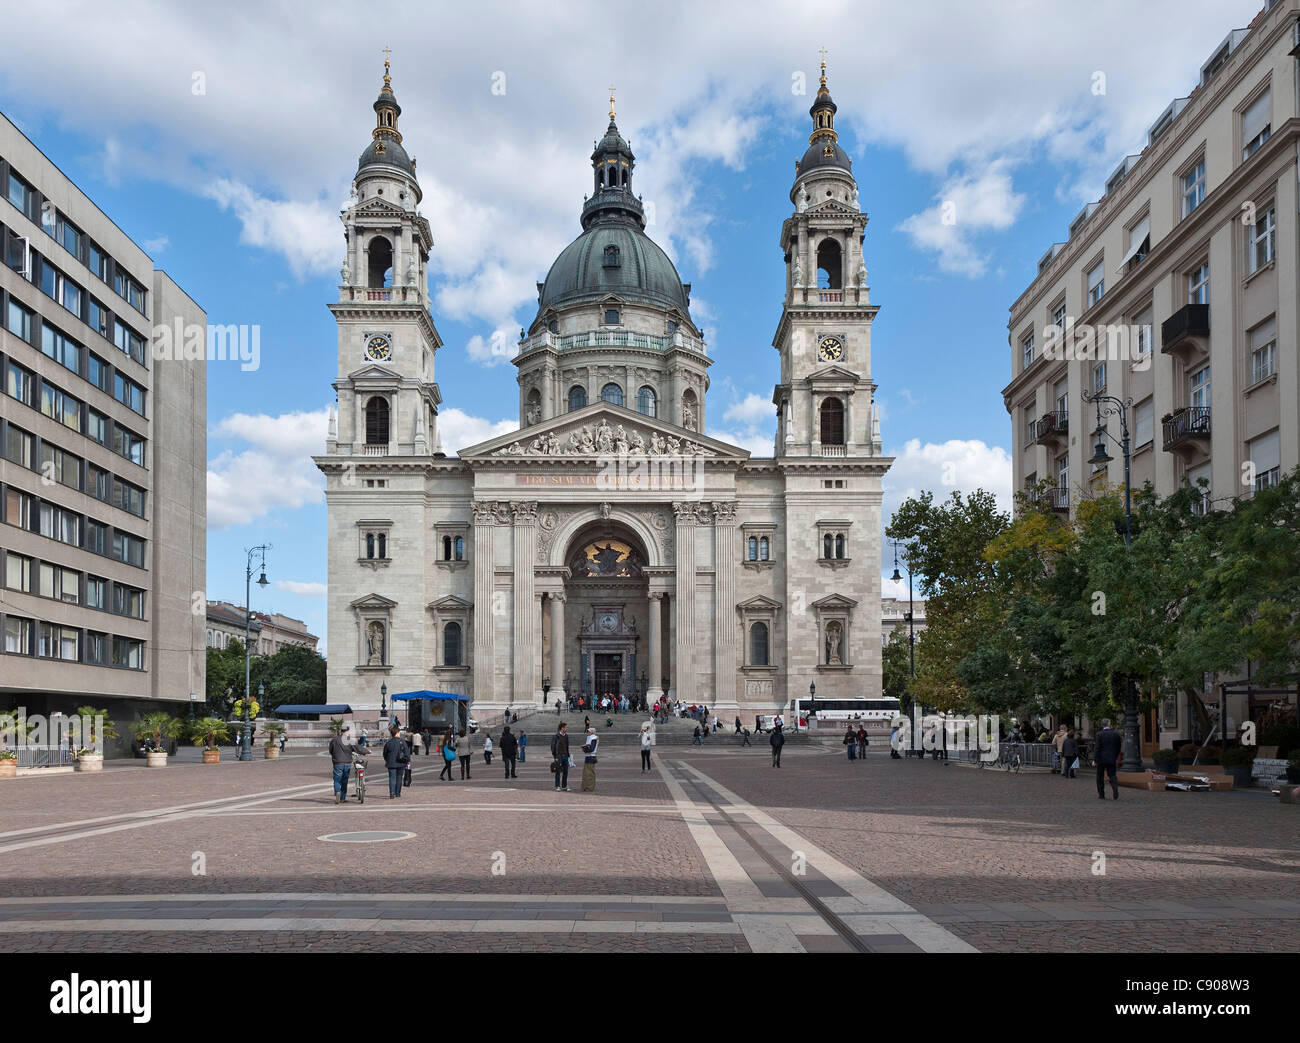 St. Stephen's Basilica - Szent István-bazilika the  Roman Catholic basilica in Budapest Stock Photo